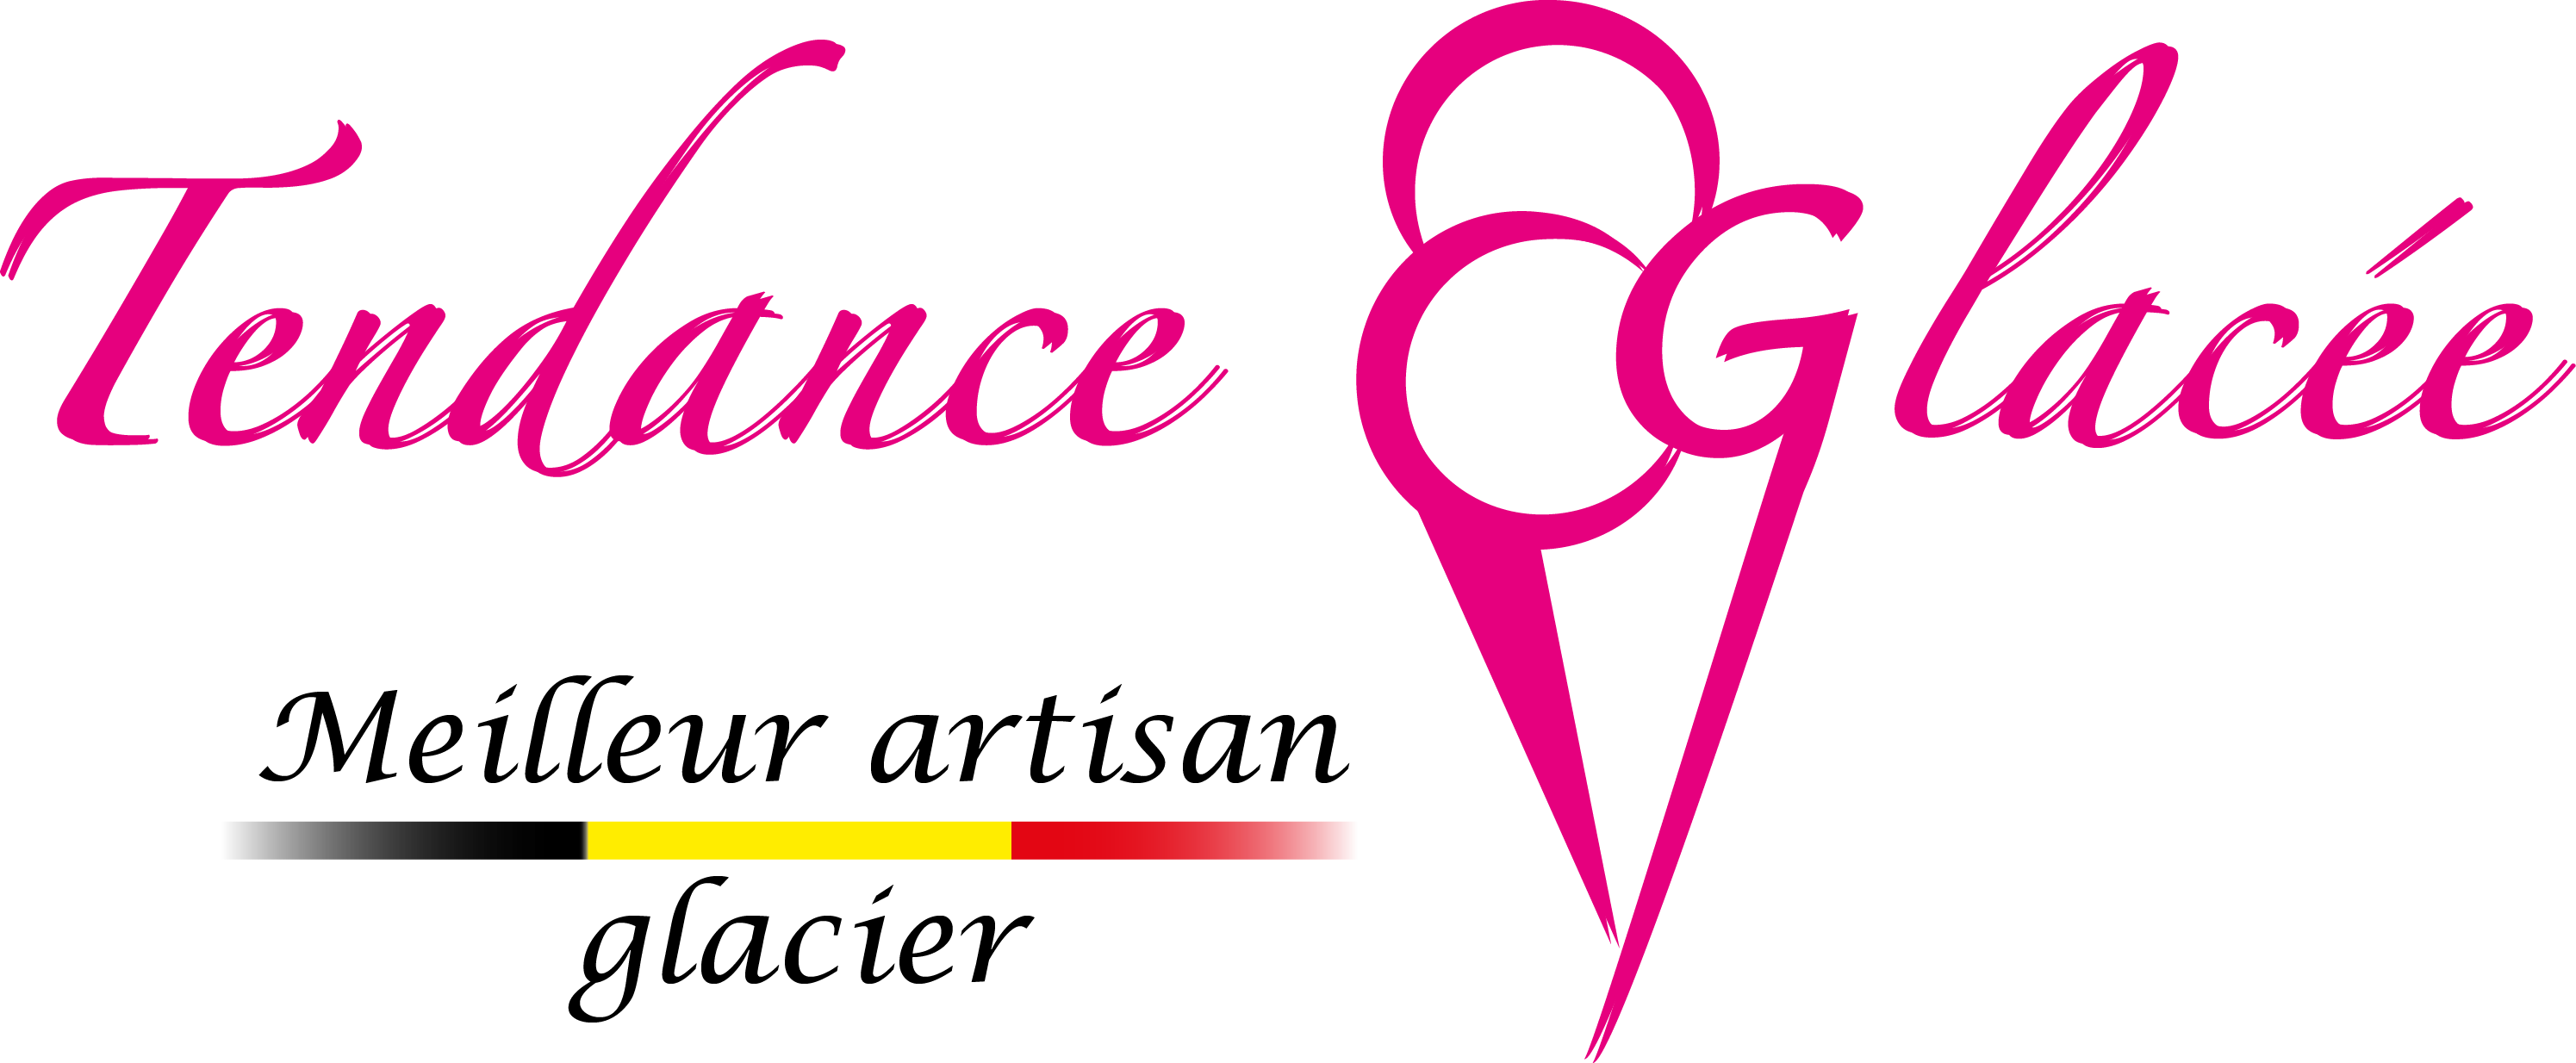 Tendance Glacée logo